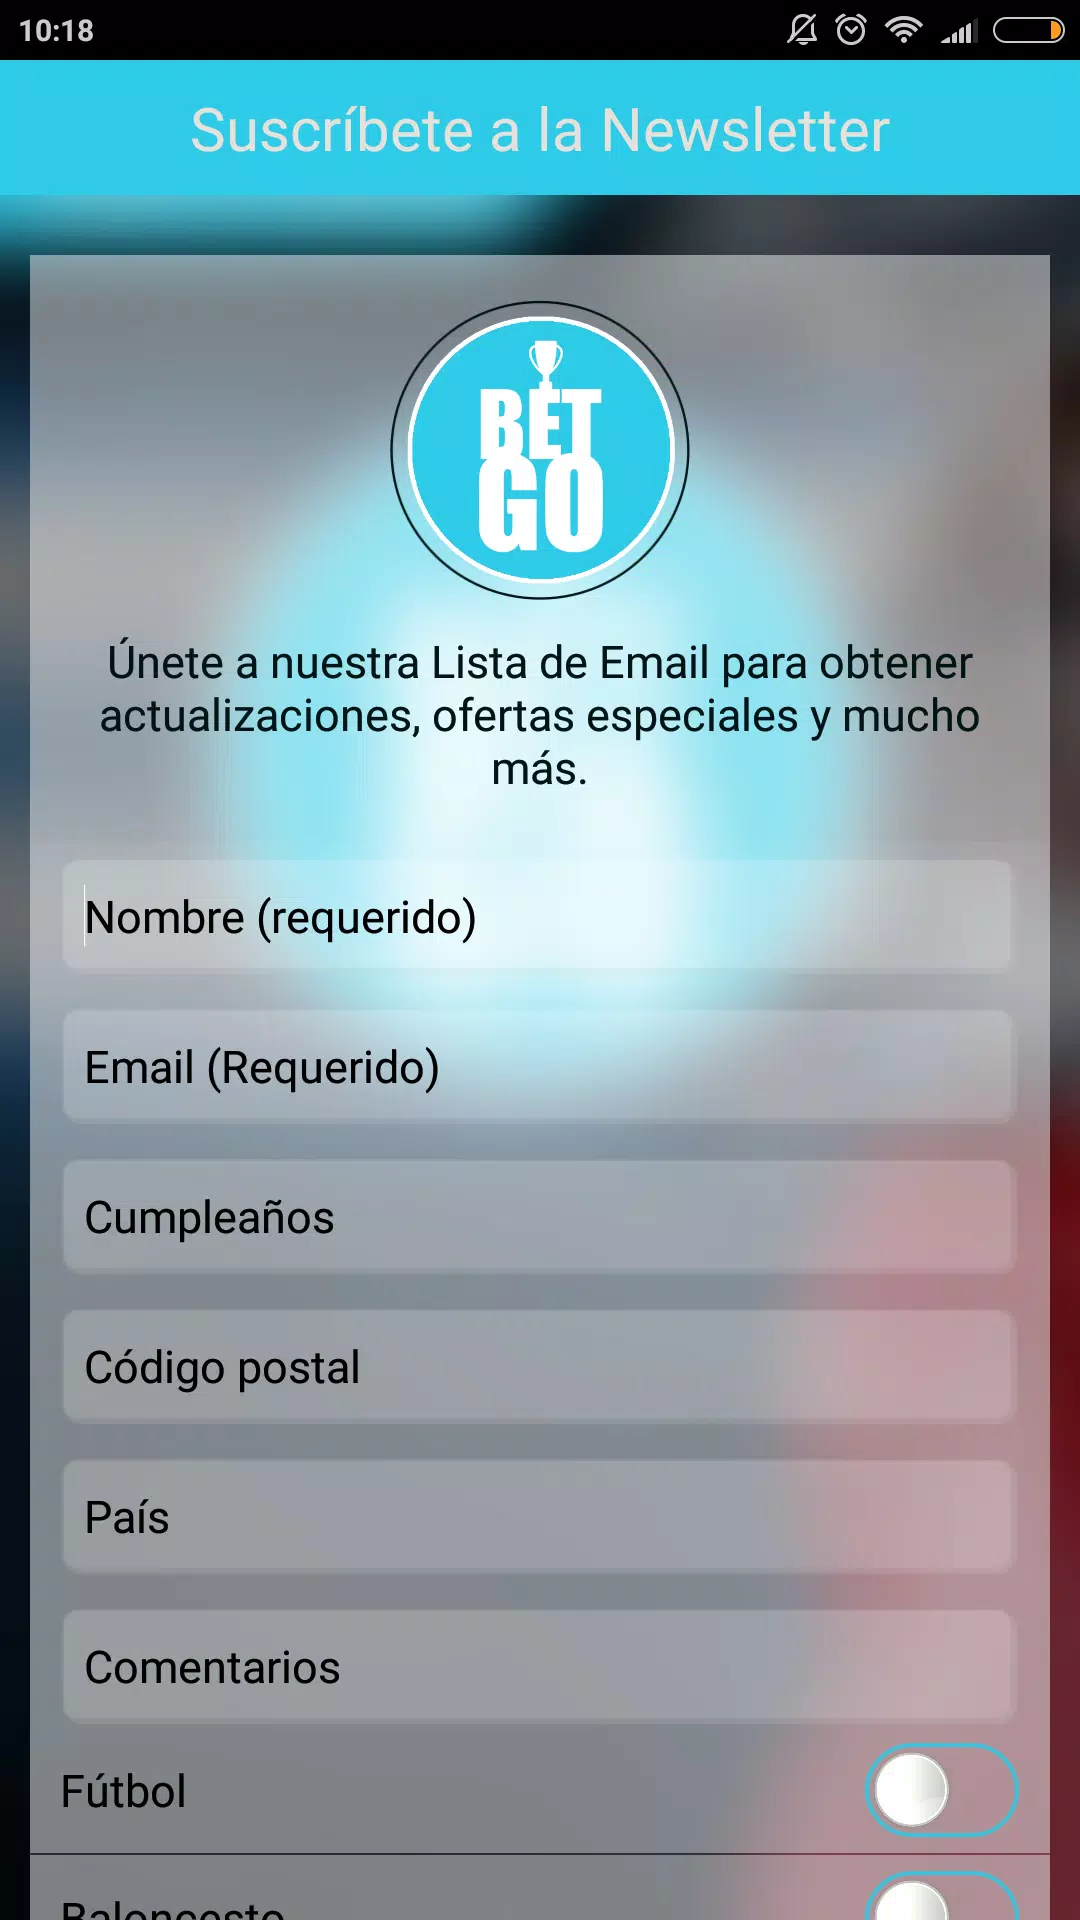 Betgol APK (Android App) - Baixar Grátis